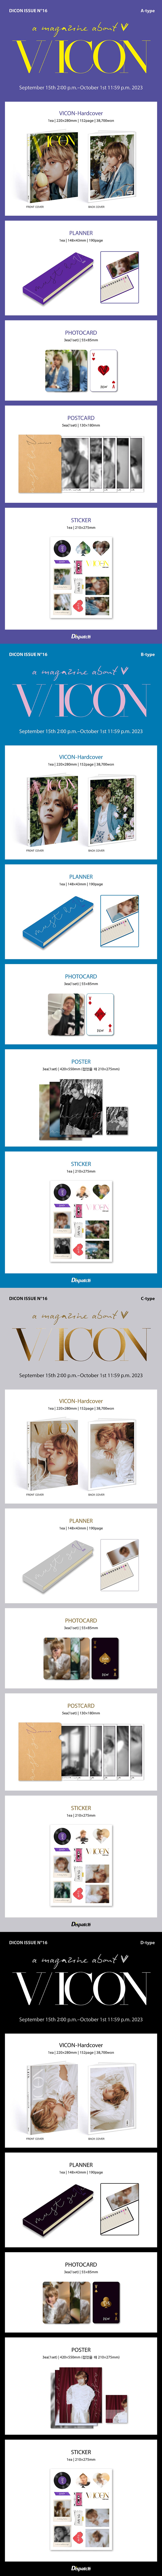 V DICON 'ISSUE N°16 : VICON DETAIL